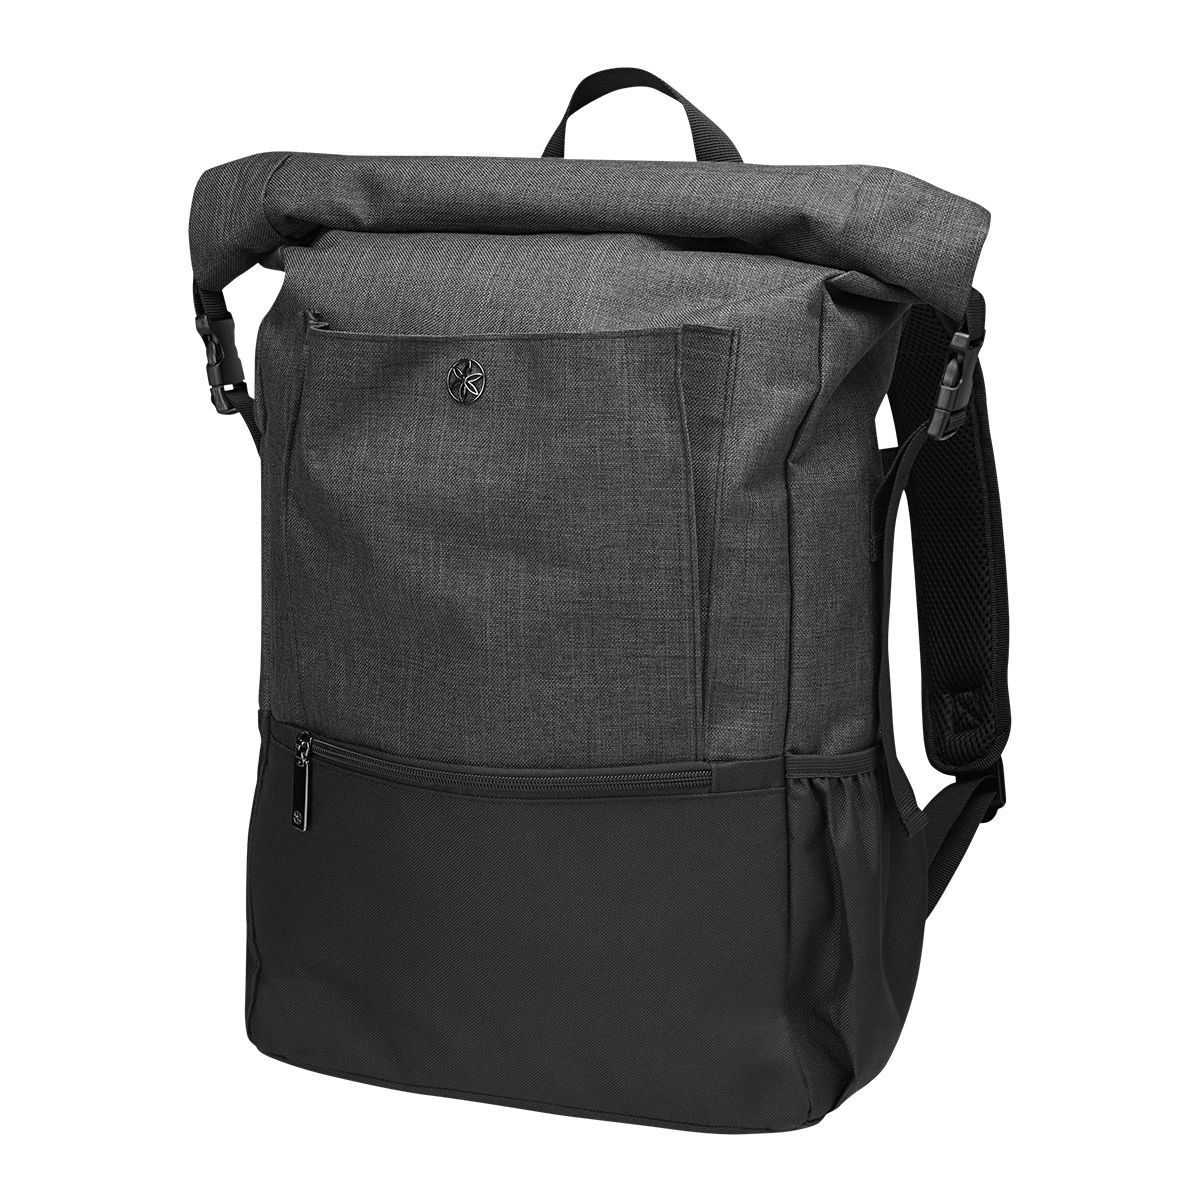 Gaiam Studio Select On-The-Move Yoga Backpack | SportChek